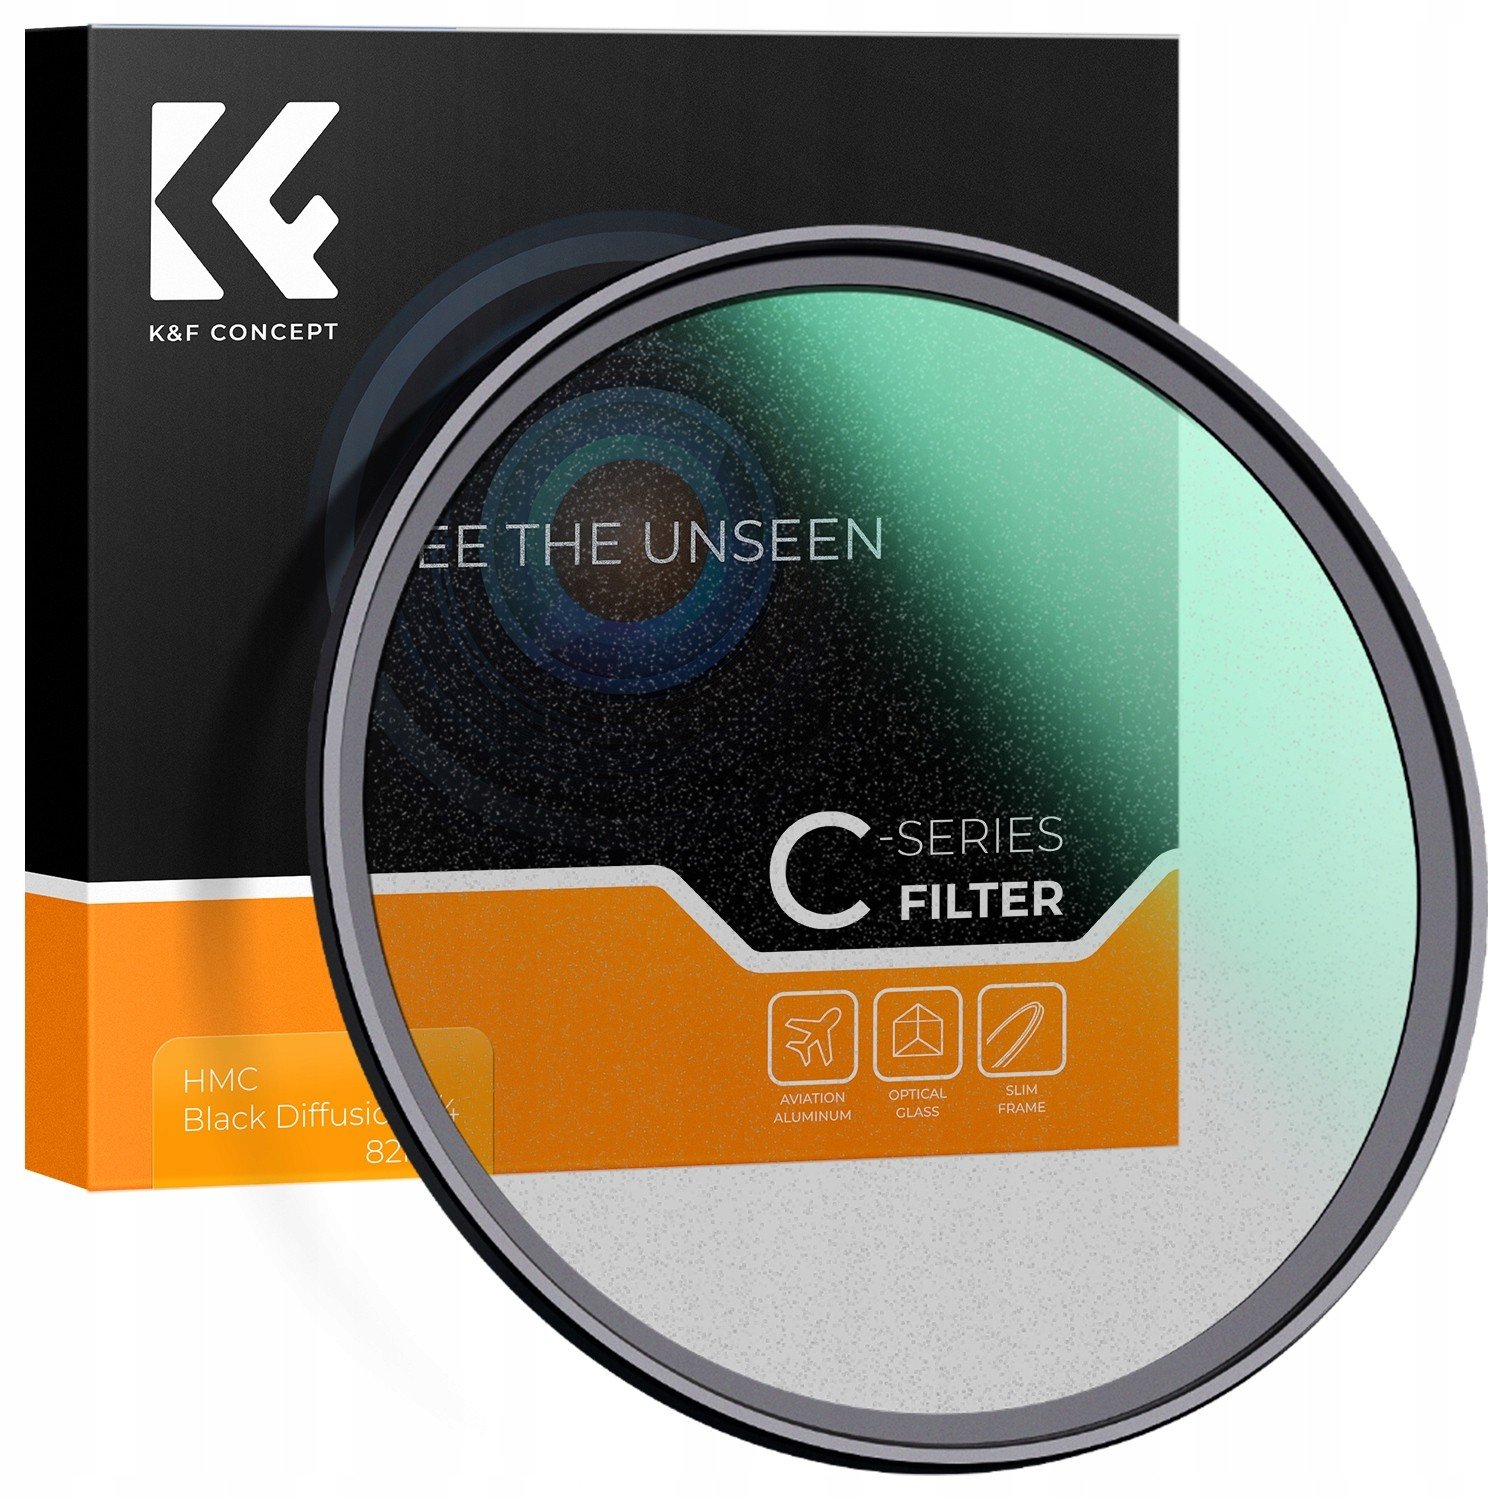 Difuzní filtr Black Mist 1/4 82mm Nano-C K&f